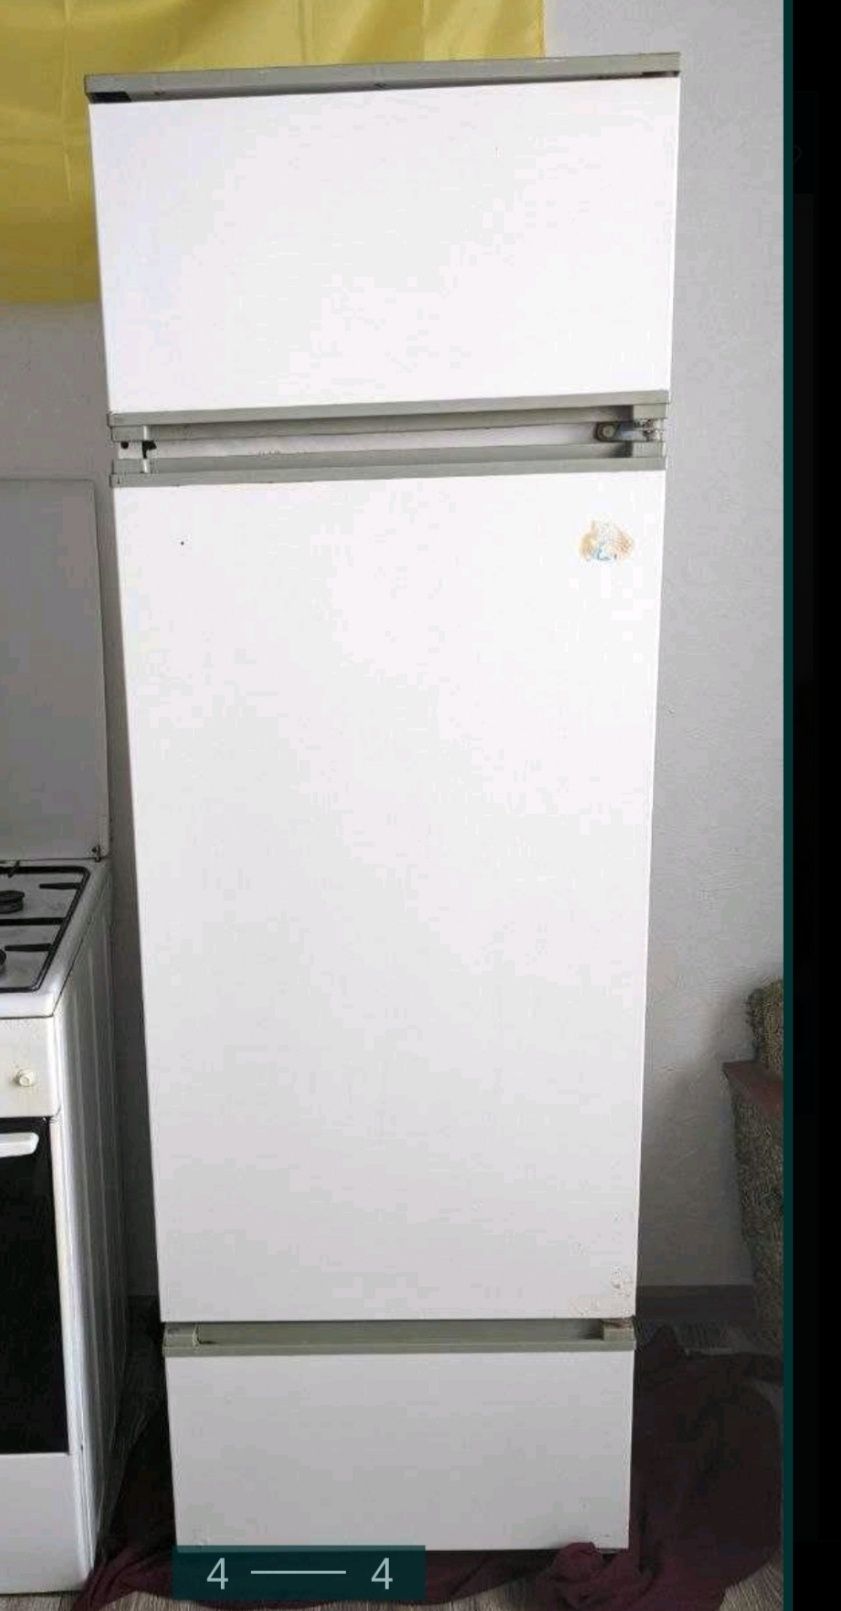 Холодильник трехкамерный